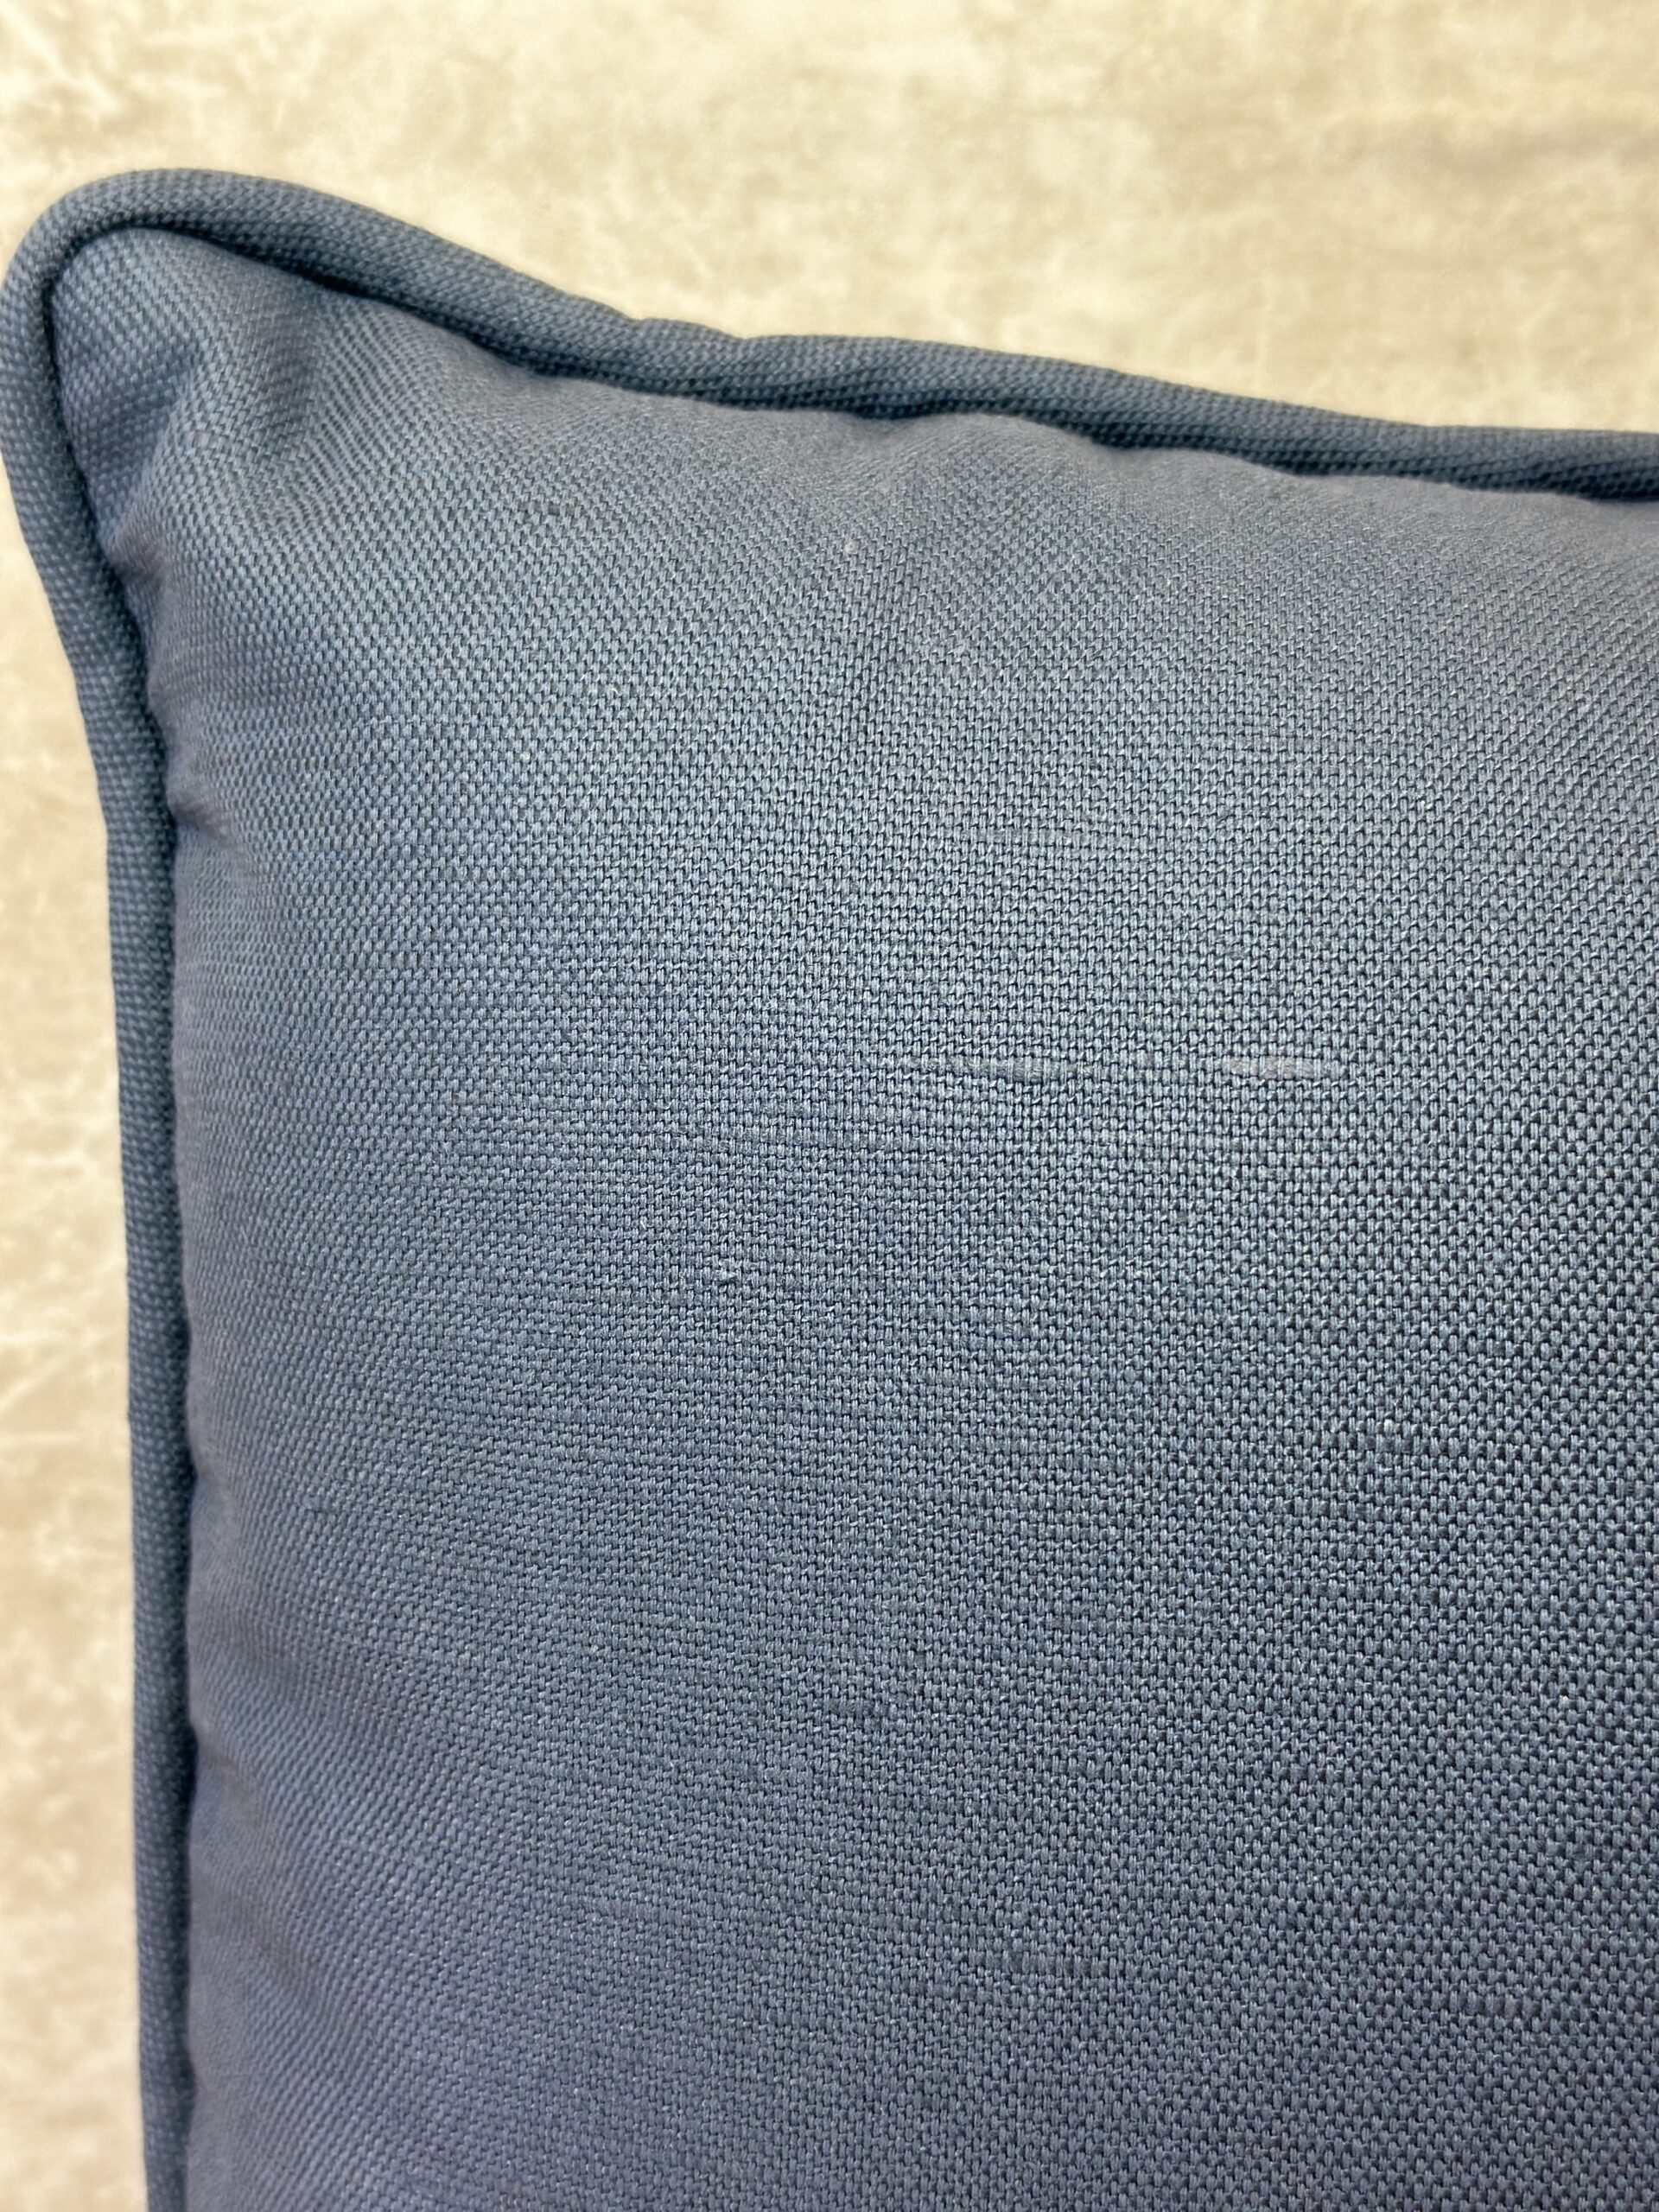 Fabricut Dublin Line Pillows